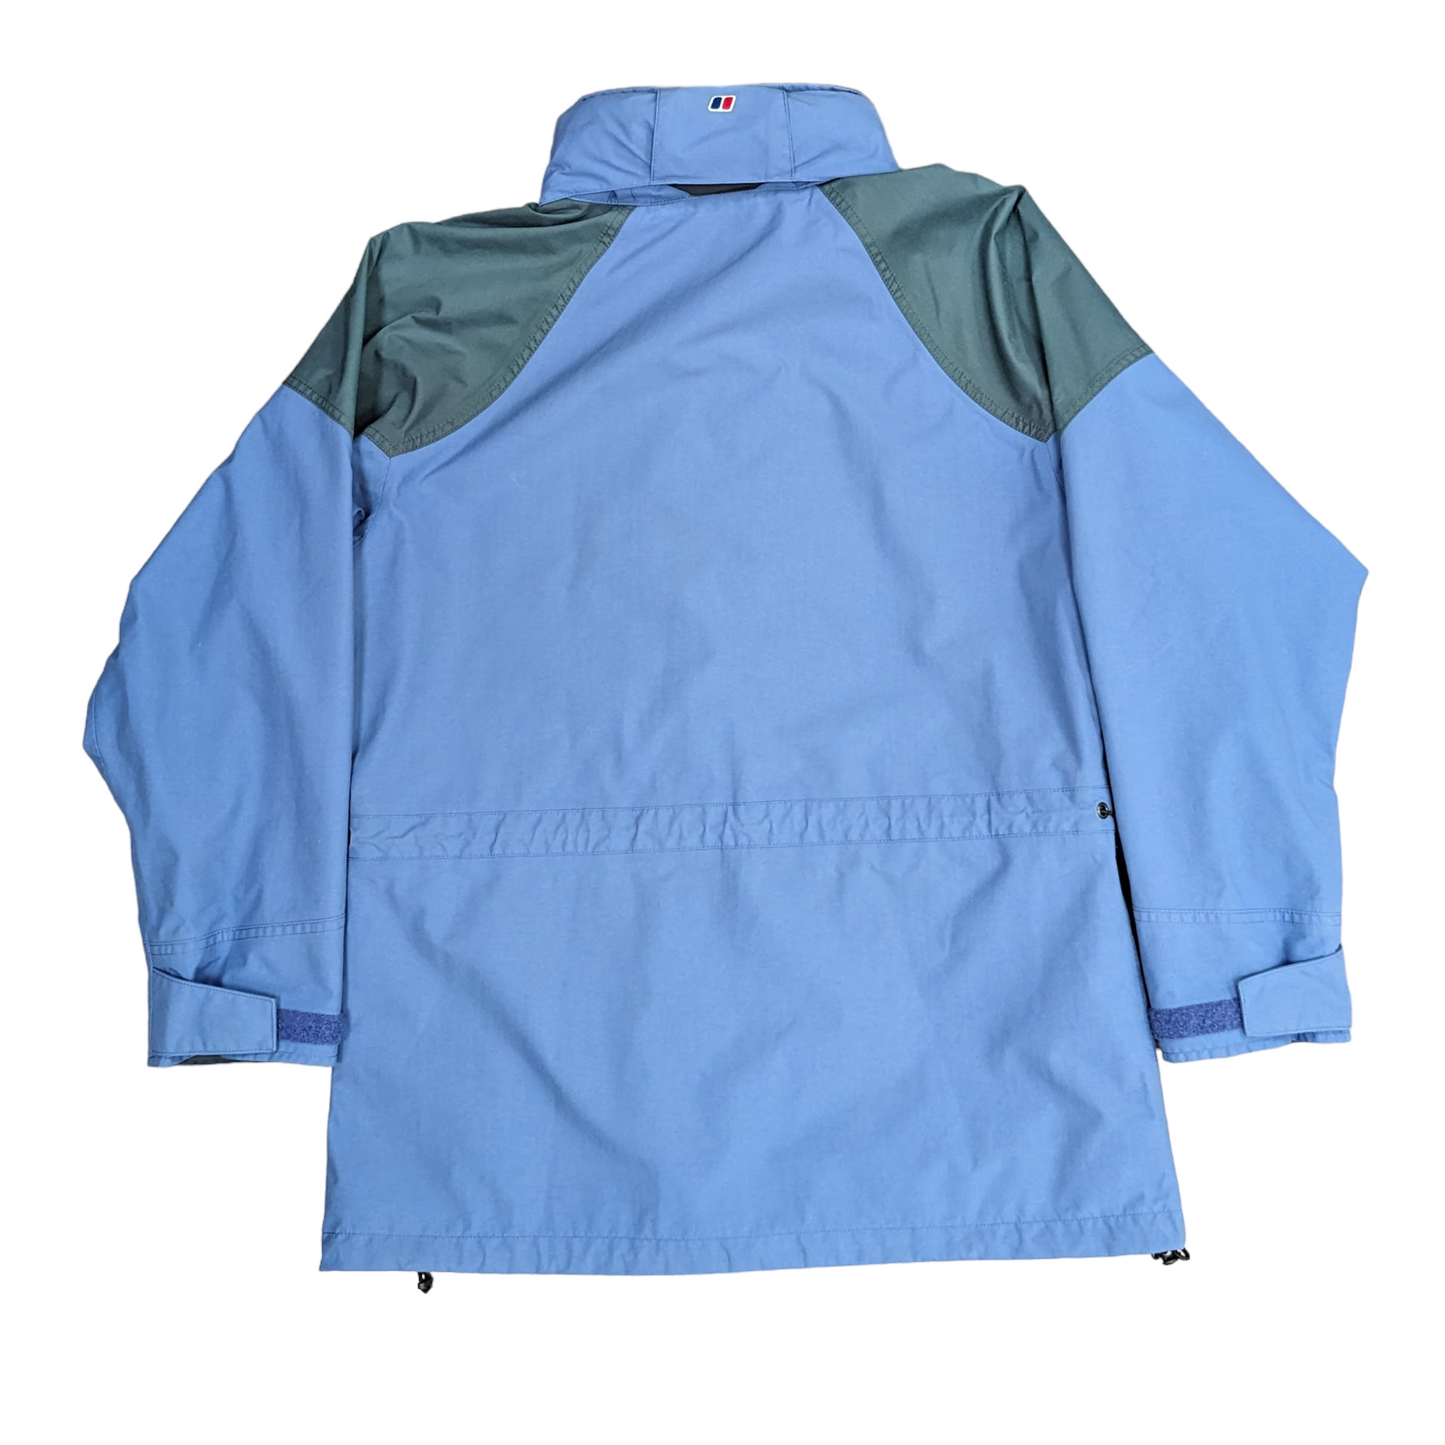 Berghaus GoreTex Raincoat Size UK 14